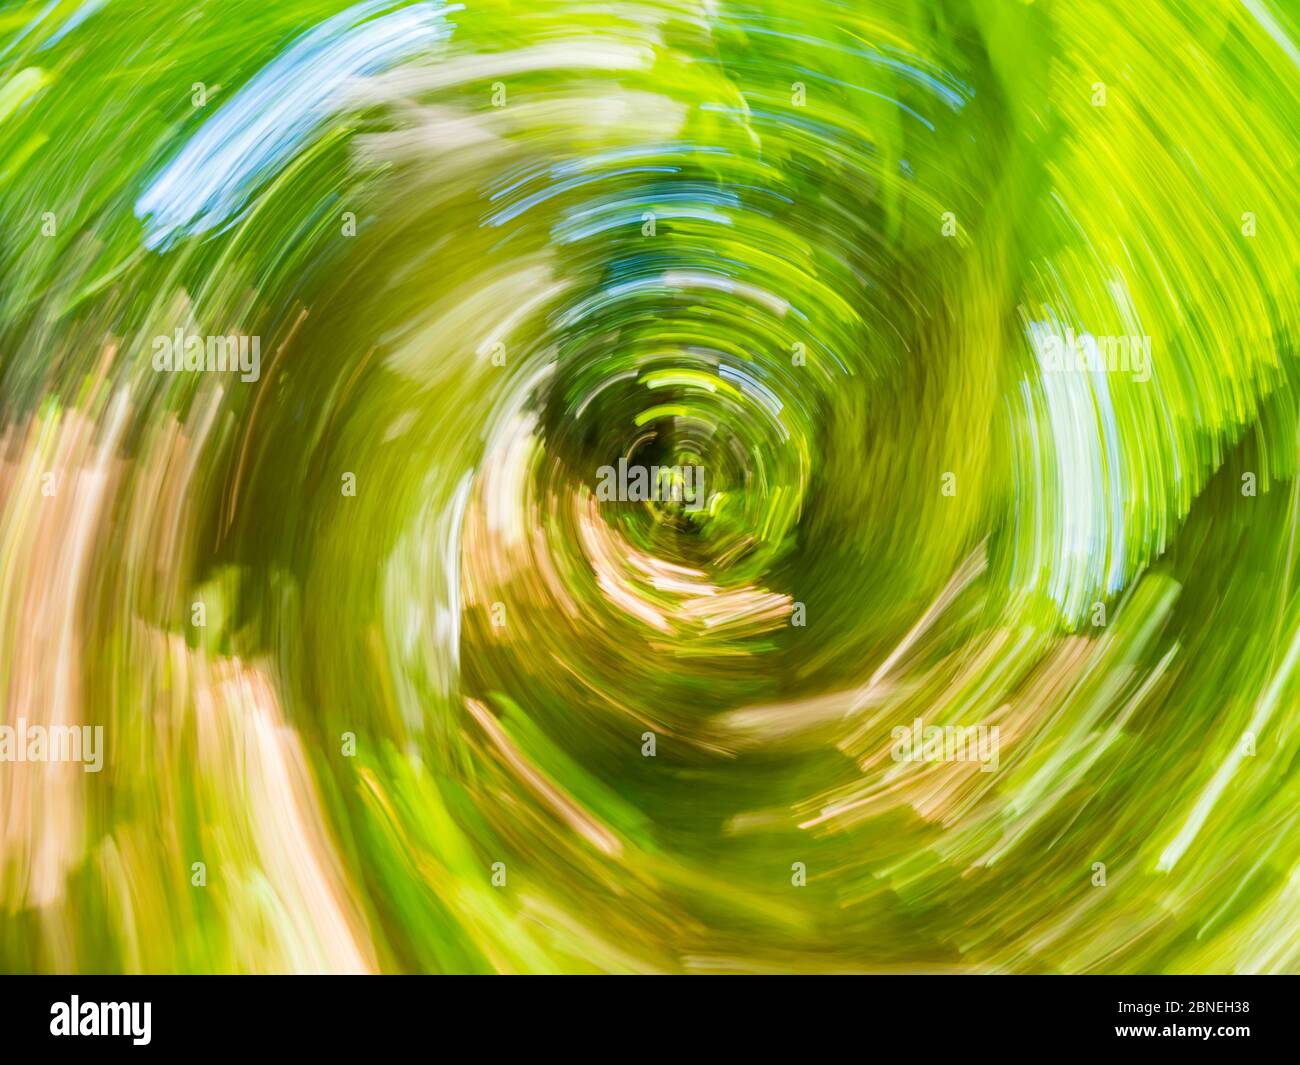 Green forest creating vertigo intentionally blurry representing maximum utmost circular speed speedy fast movement Stock Photo